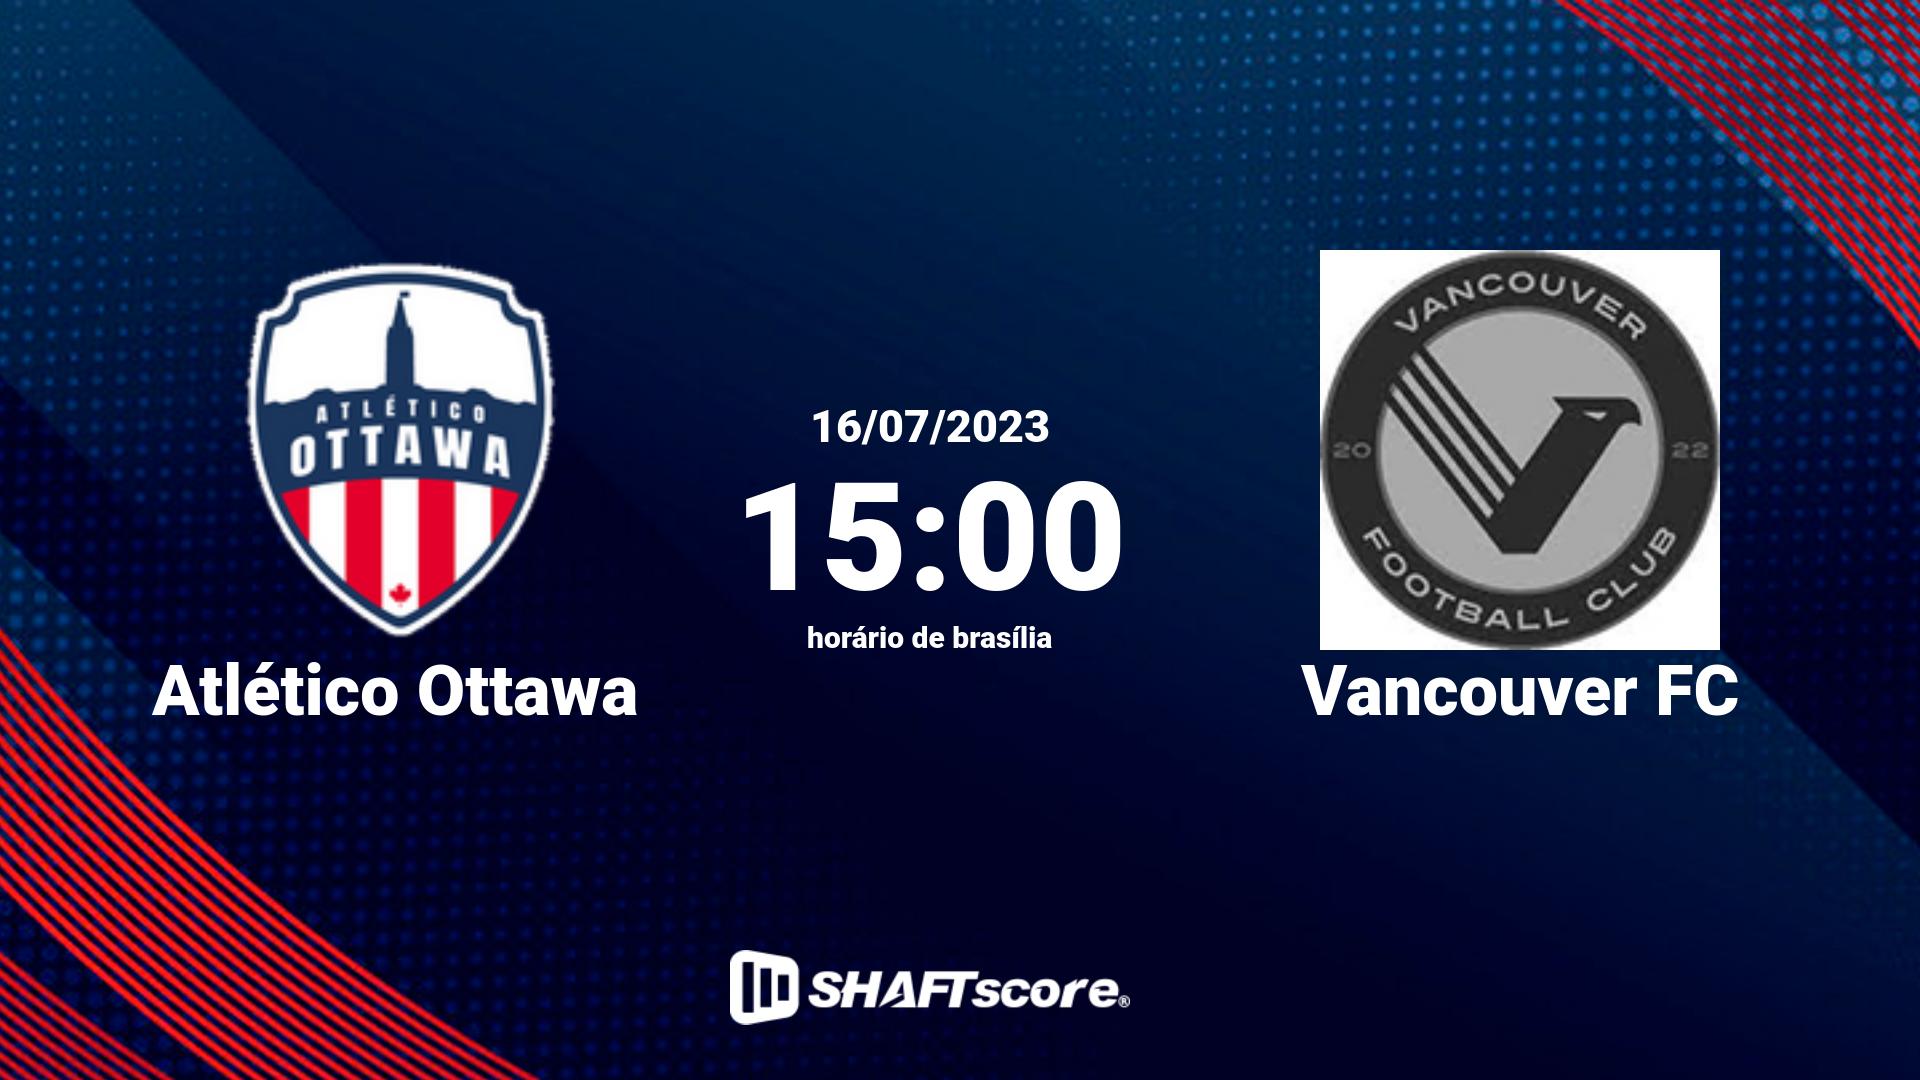 Estatísticas do jogo Atlético Ottawa vs Vancouver FC 16.07 15:00